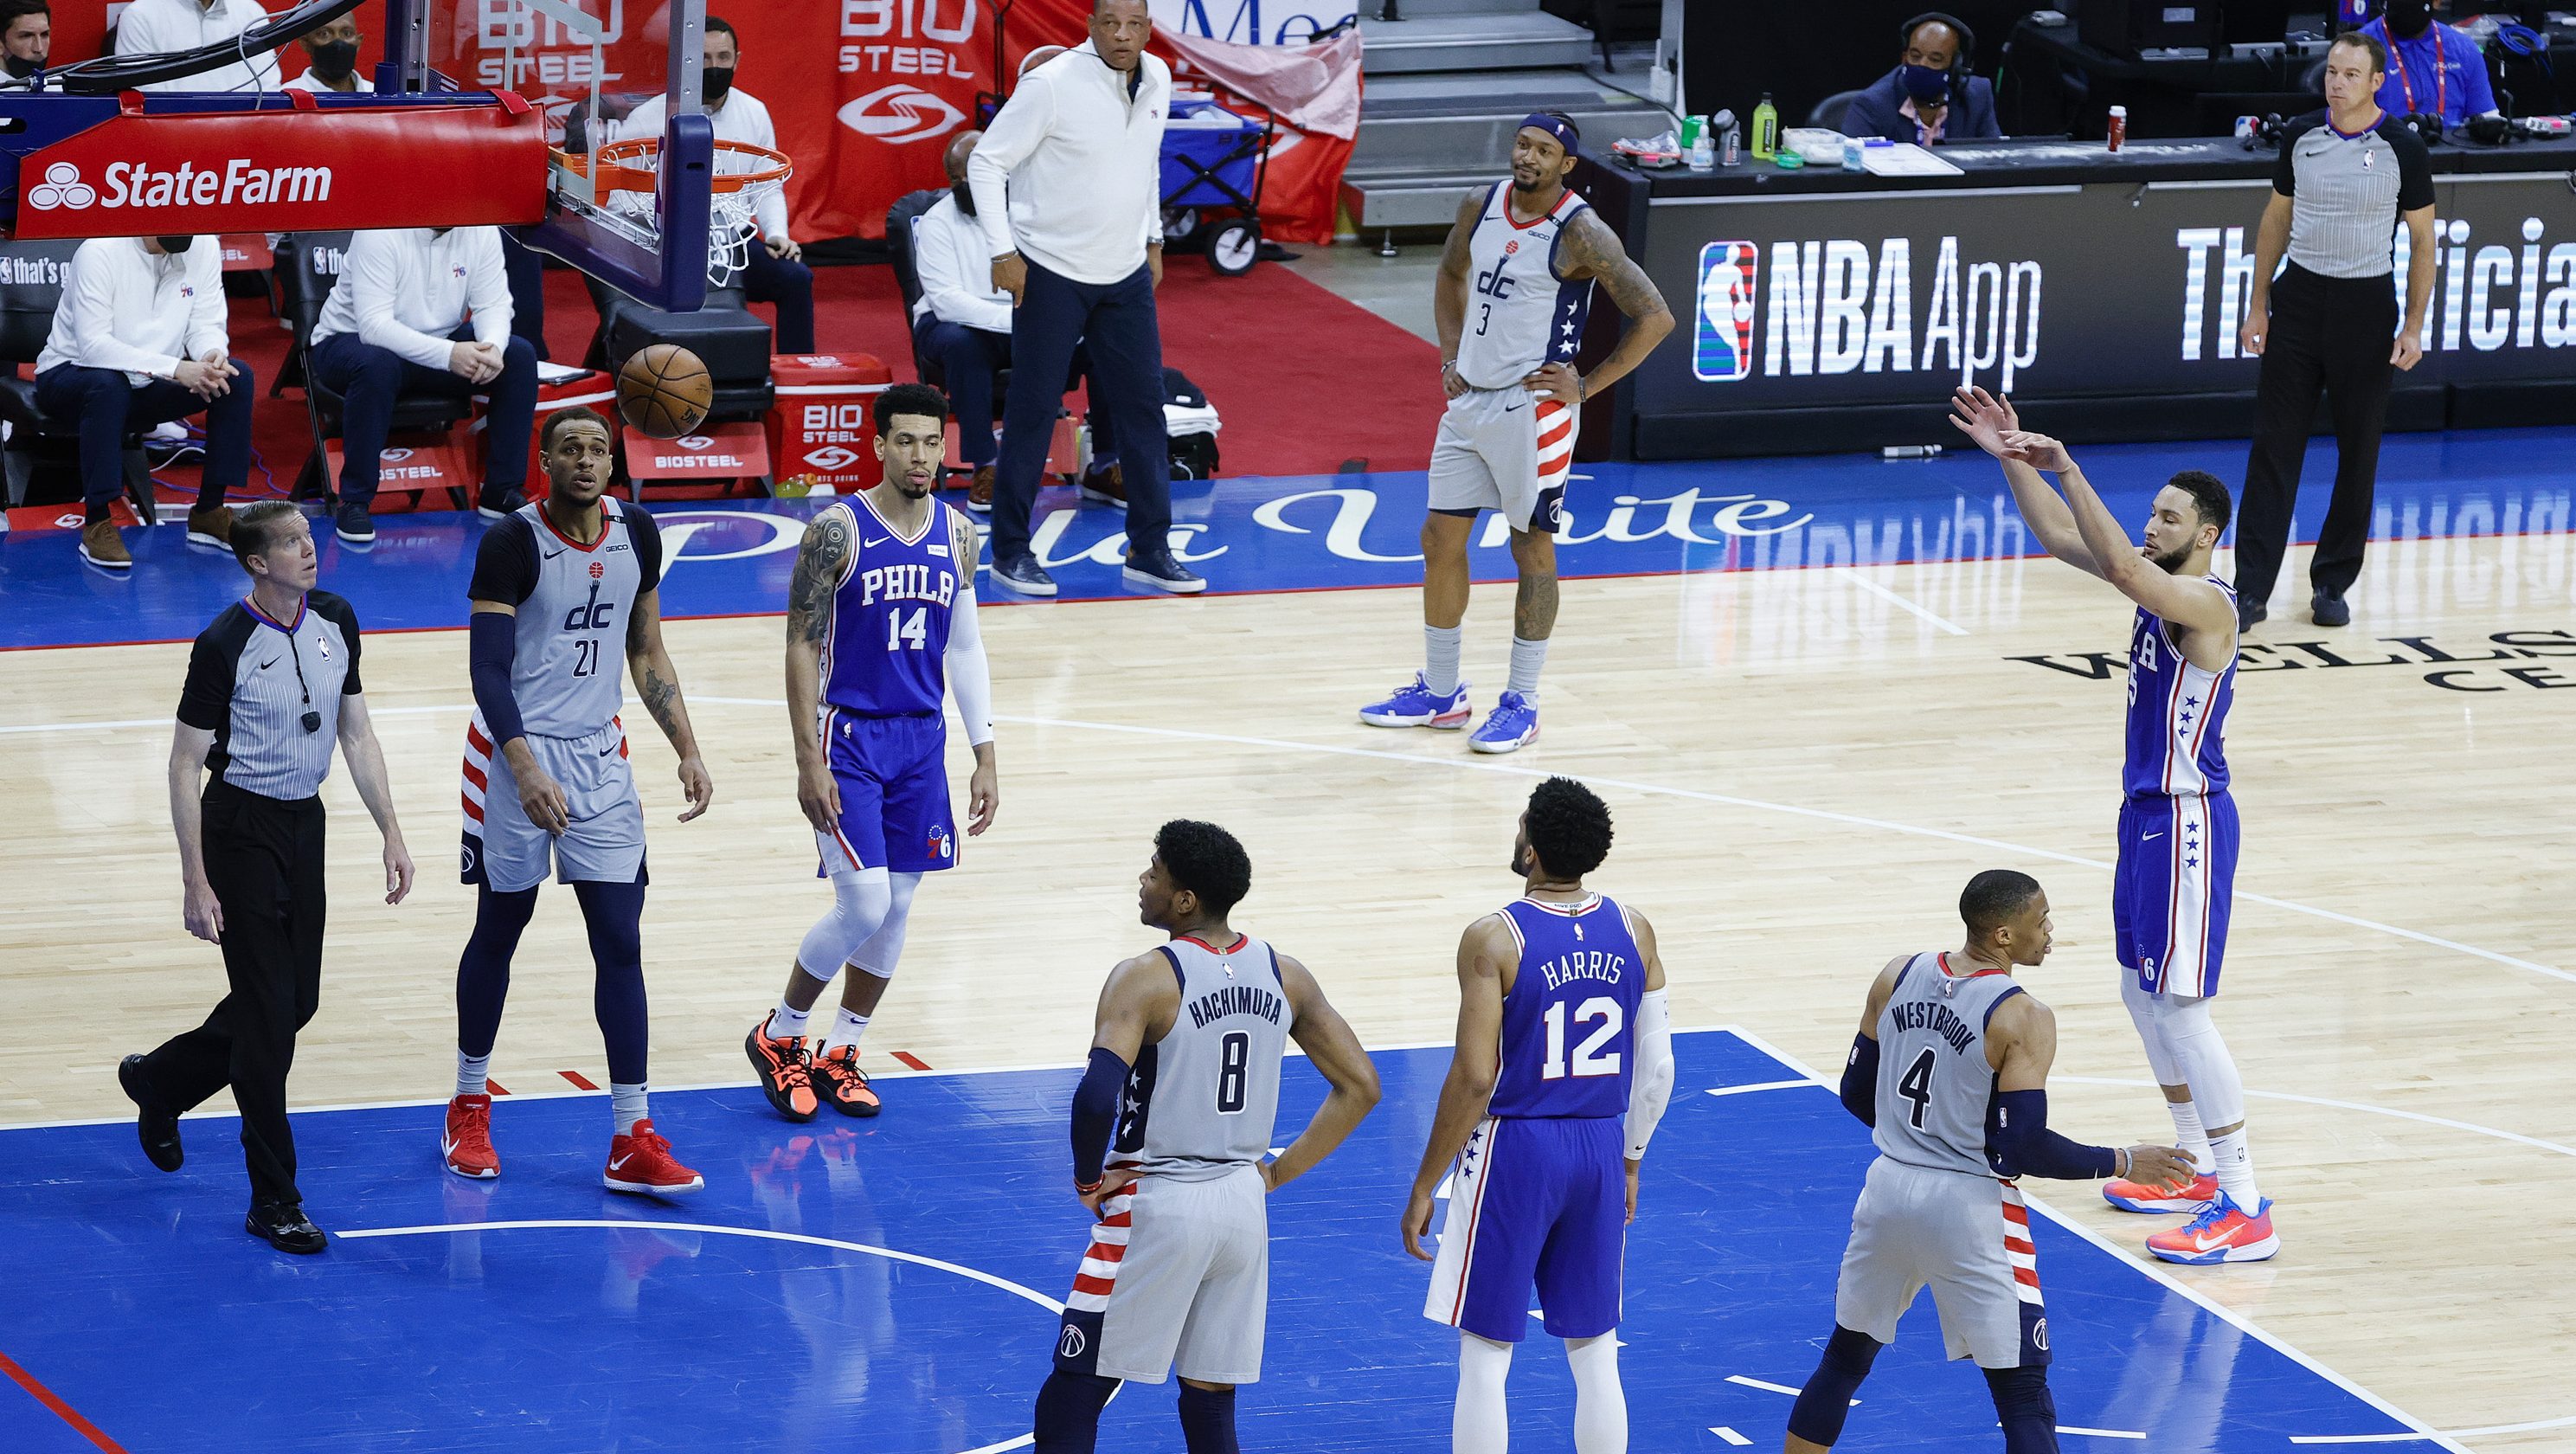 Philadelphia guard Ben Simmons named NBA rookie of the year, NBA